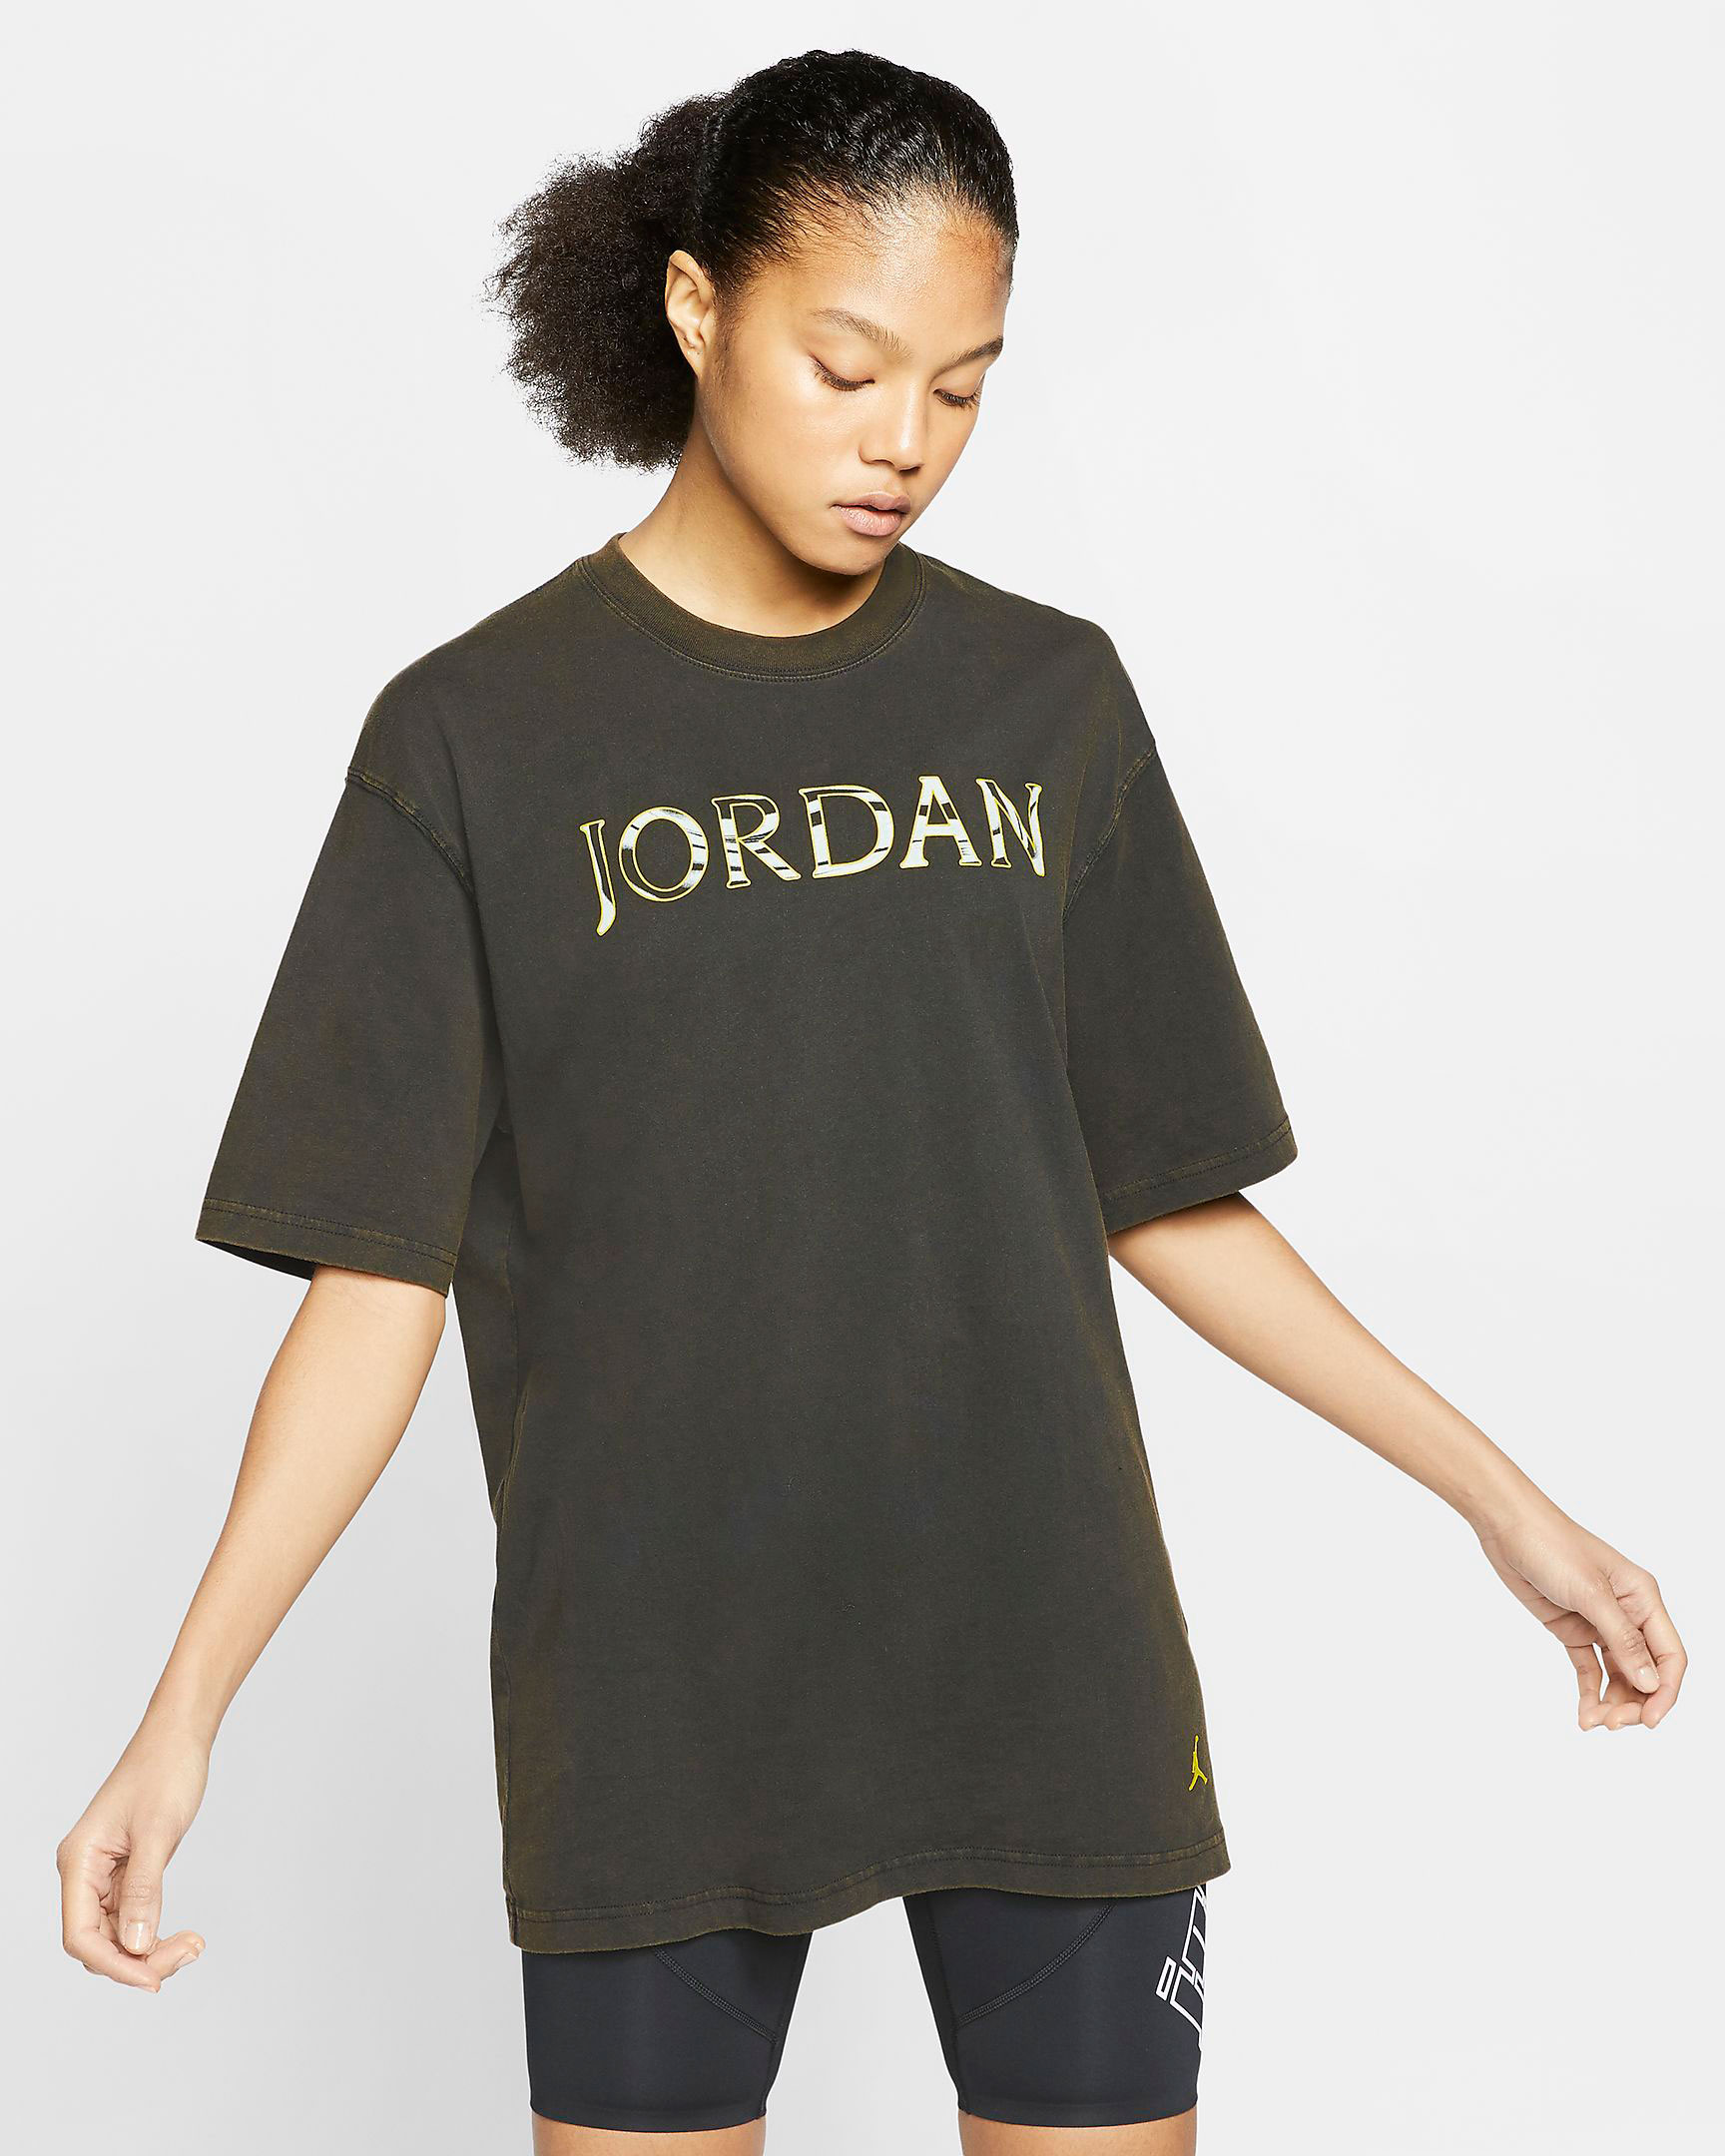 jordan shirts womens